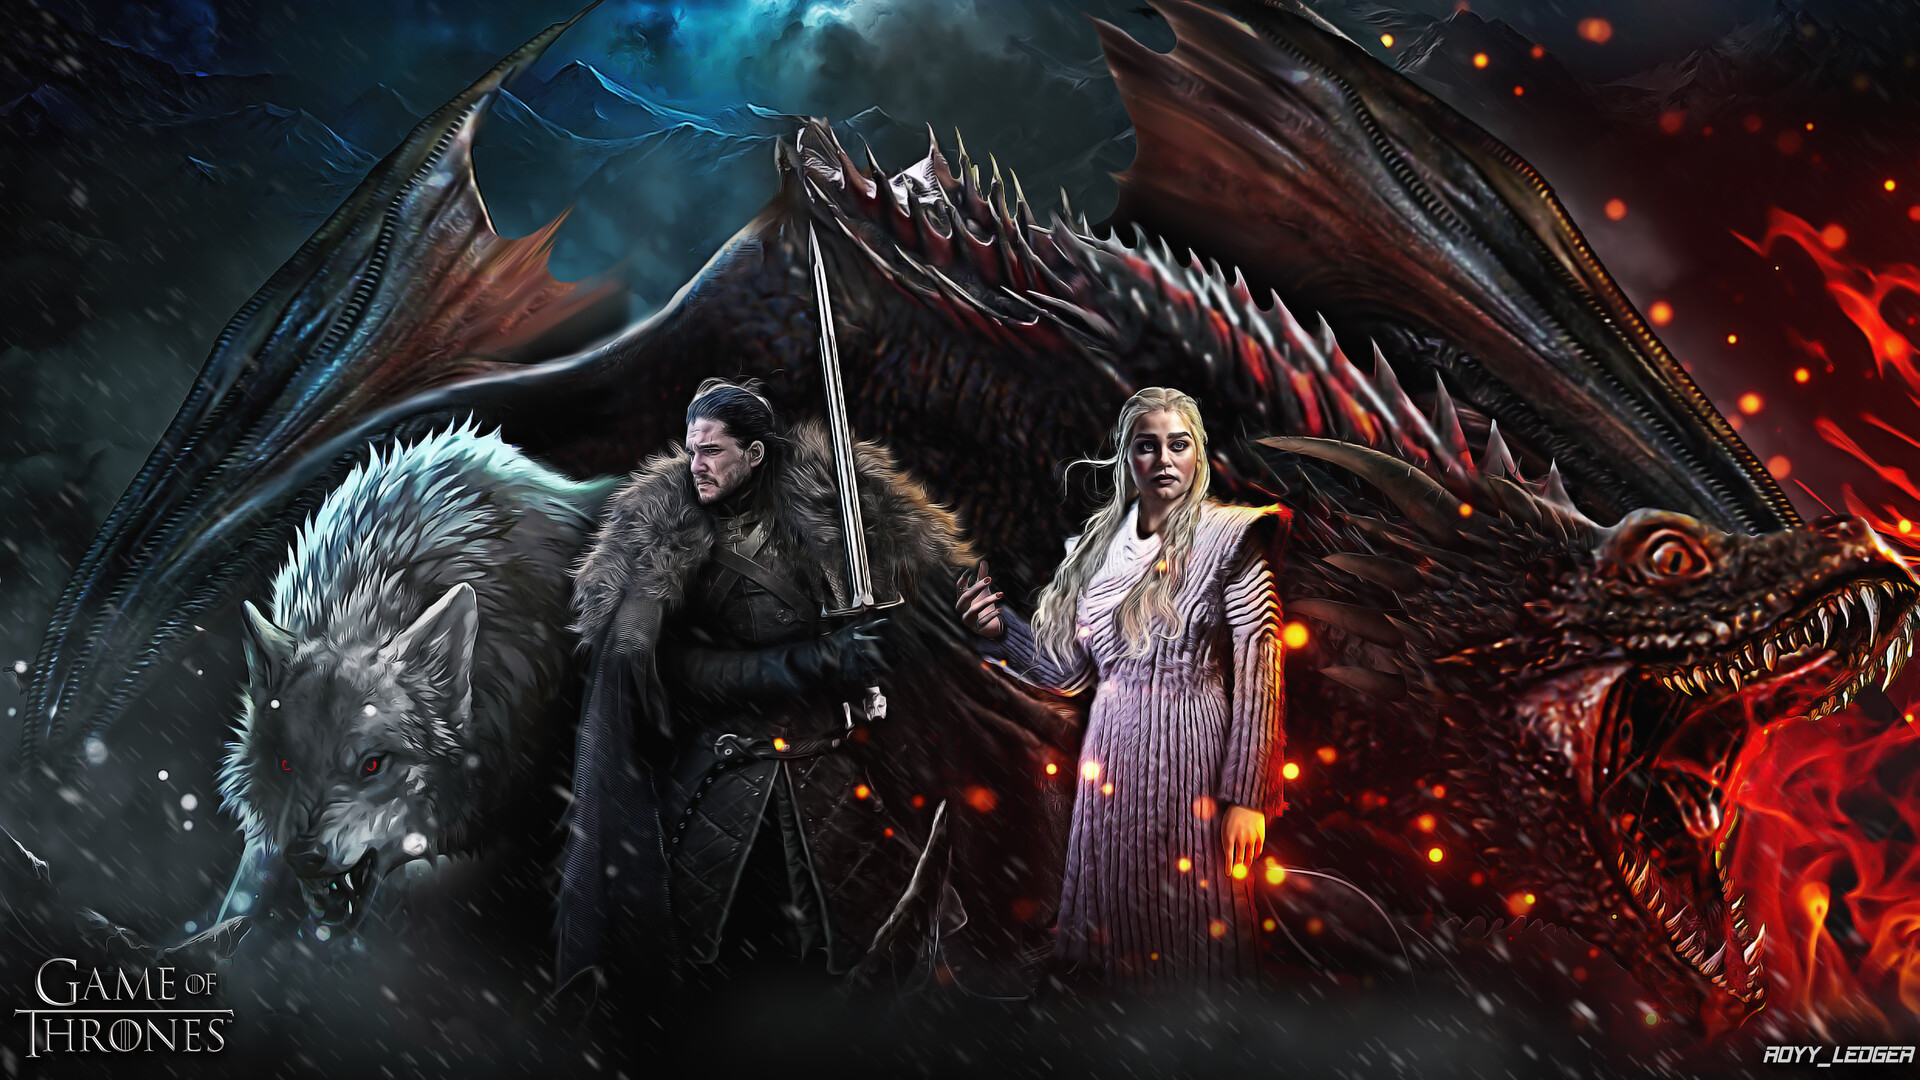 Jon Snow And Daenerys Targaryen Cool Got Wallpaper By Royy Ledger